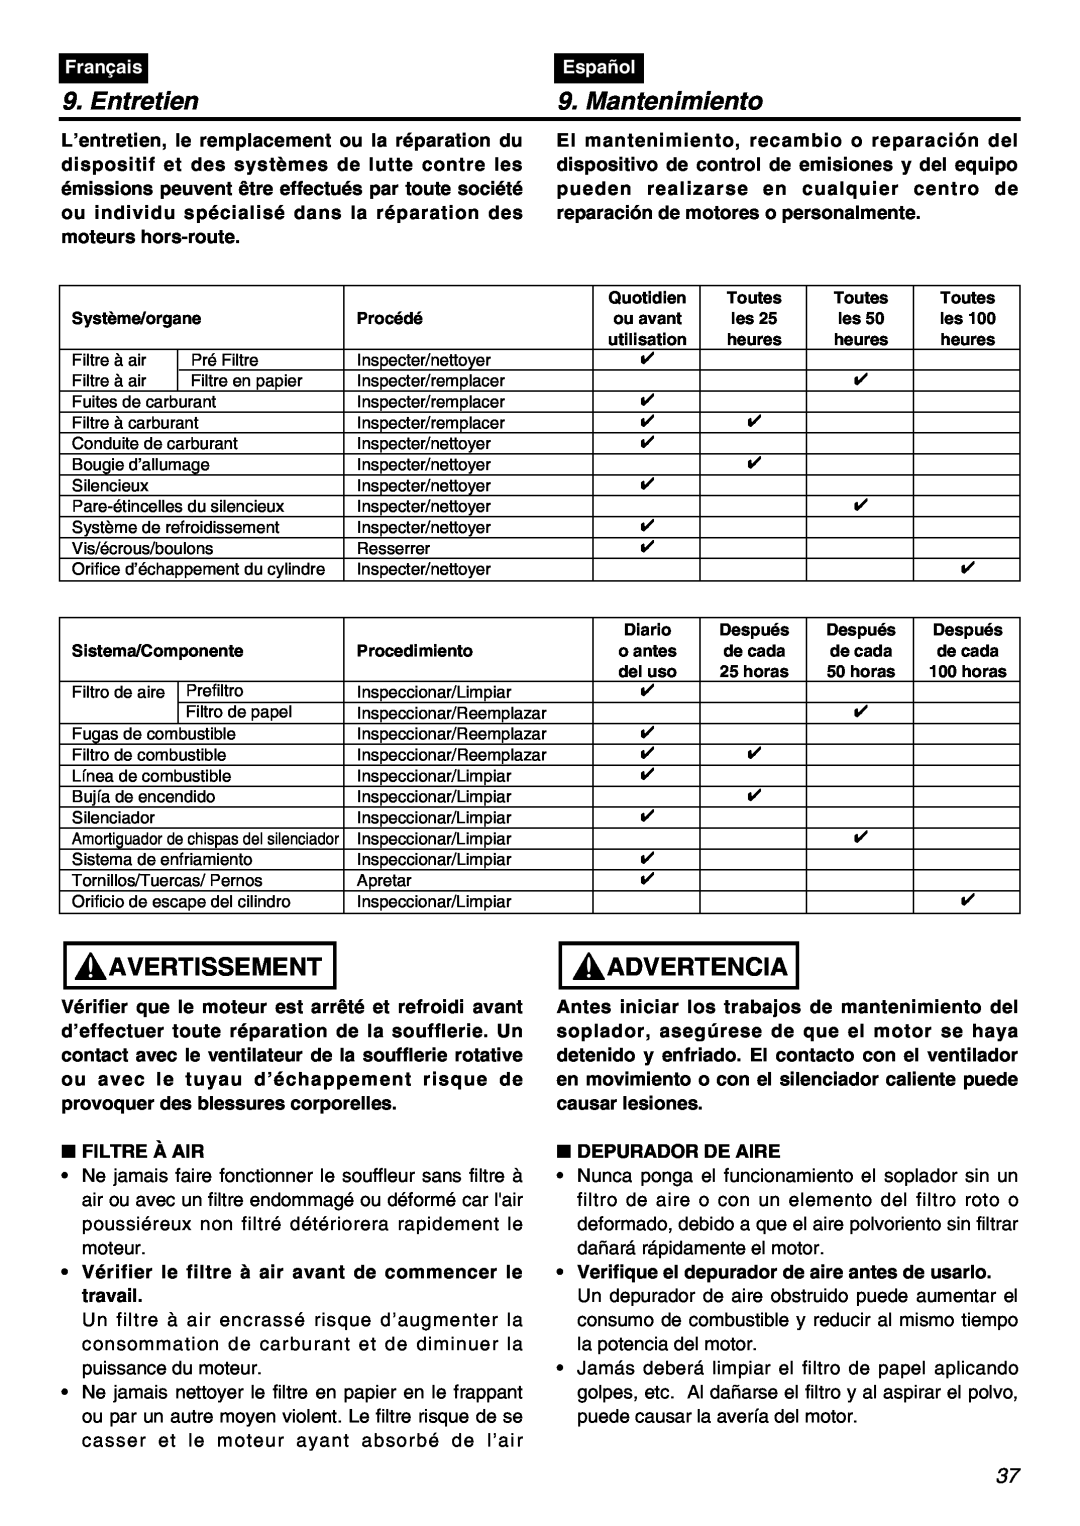 RedMax EBZ7100RH-CA, EBZ7100-CA manual Entretien, Mantenimiento, Avertissement, Advertencia, Français, Español 